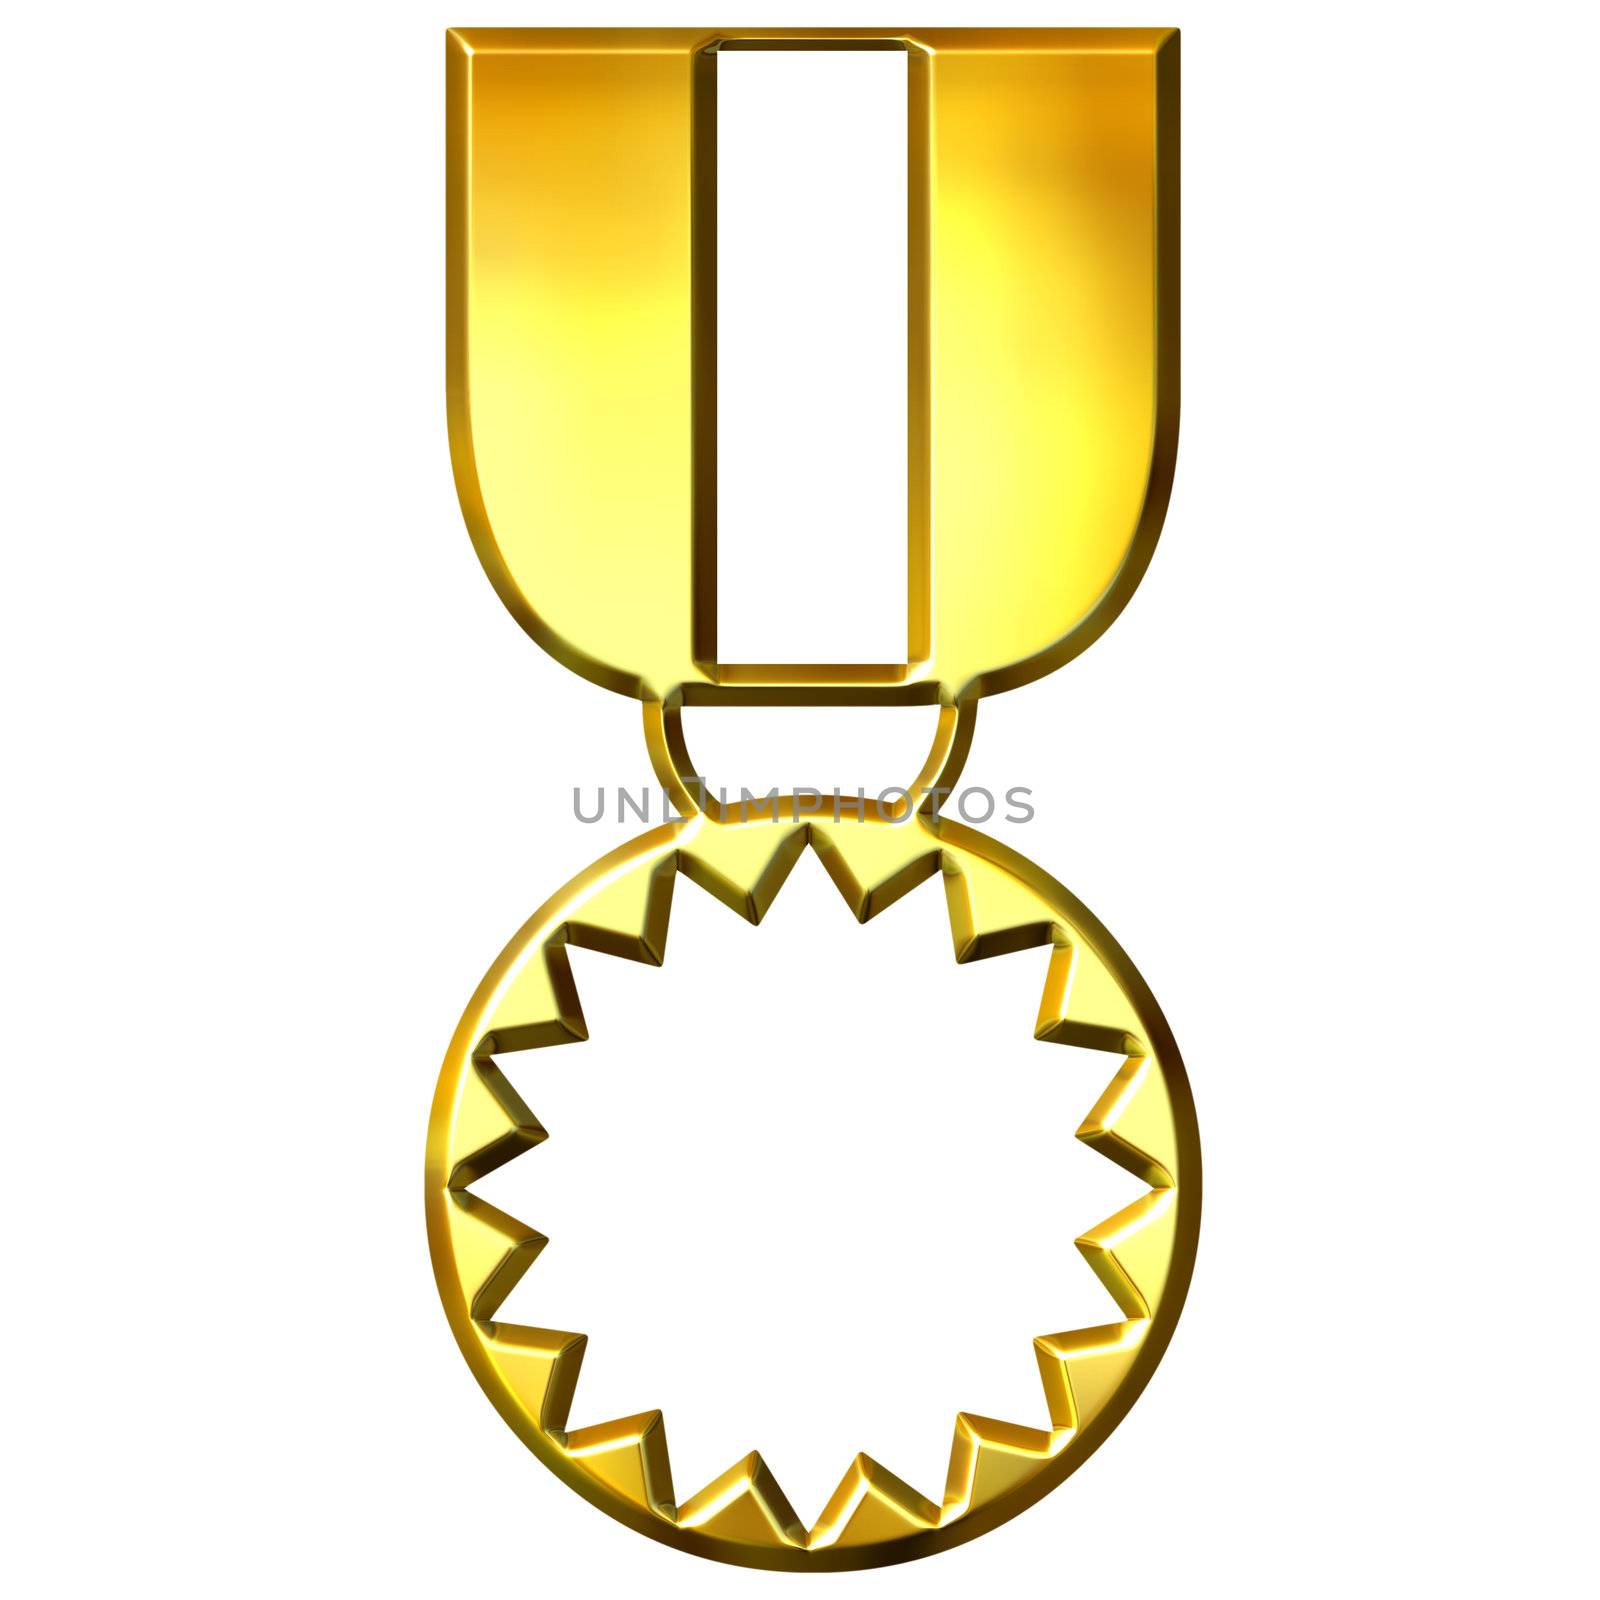 3D Golden Medal of Honour by Georgios